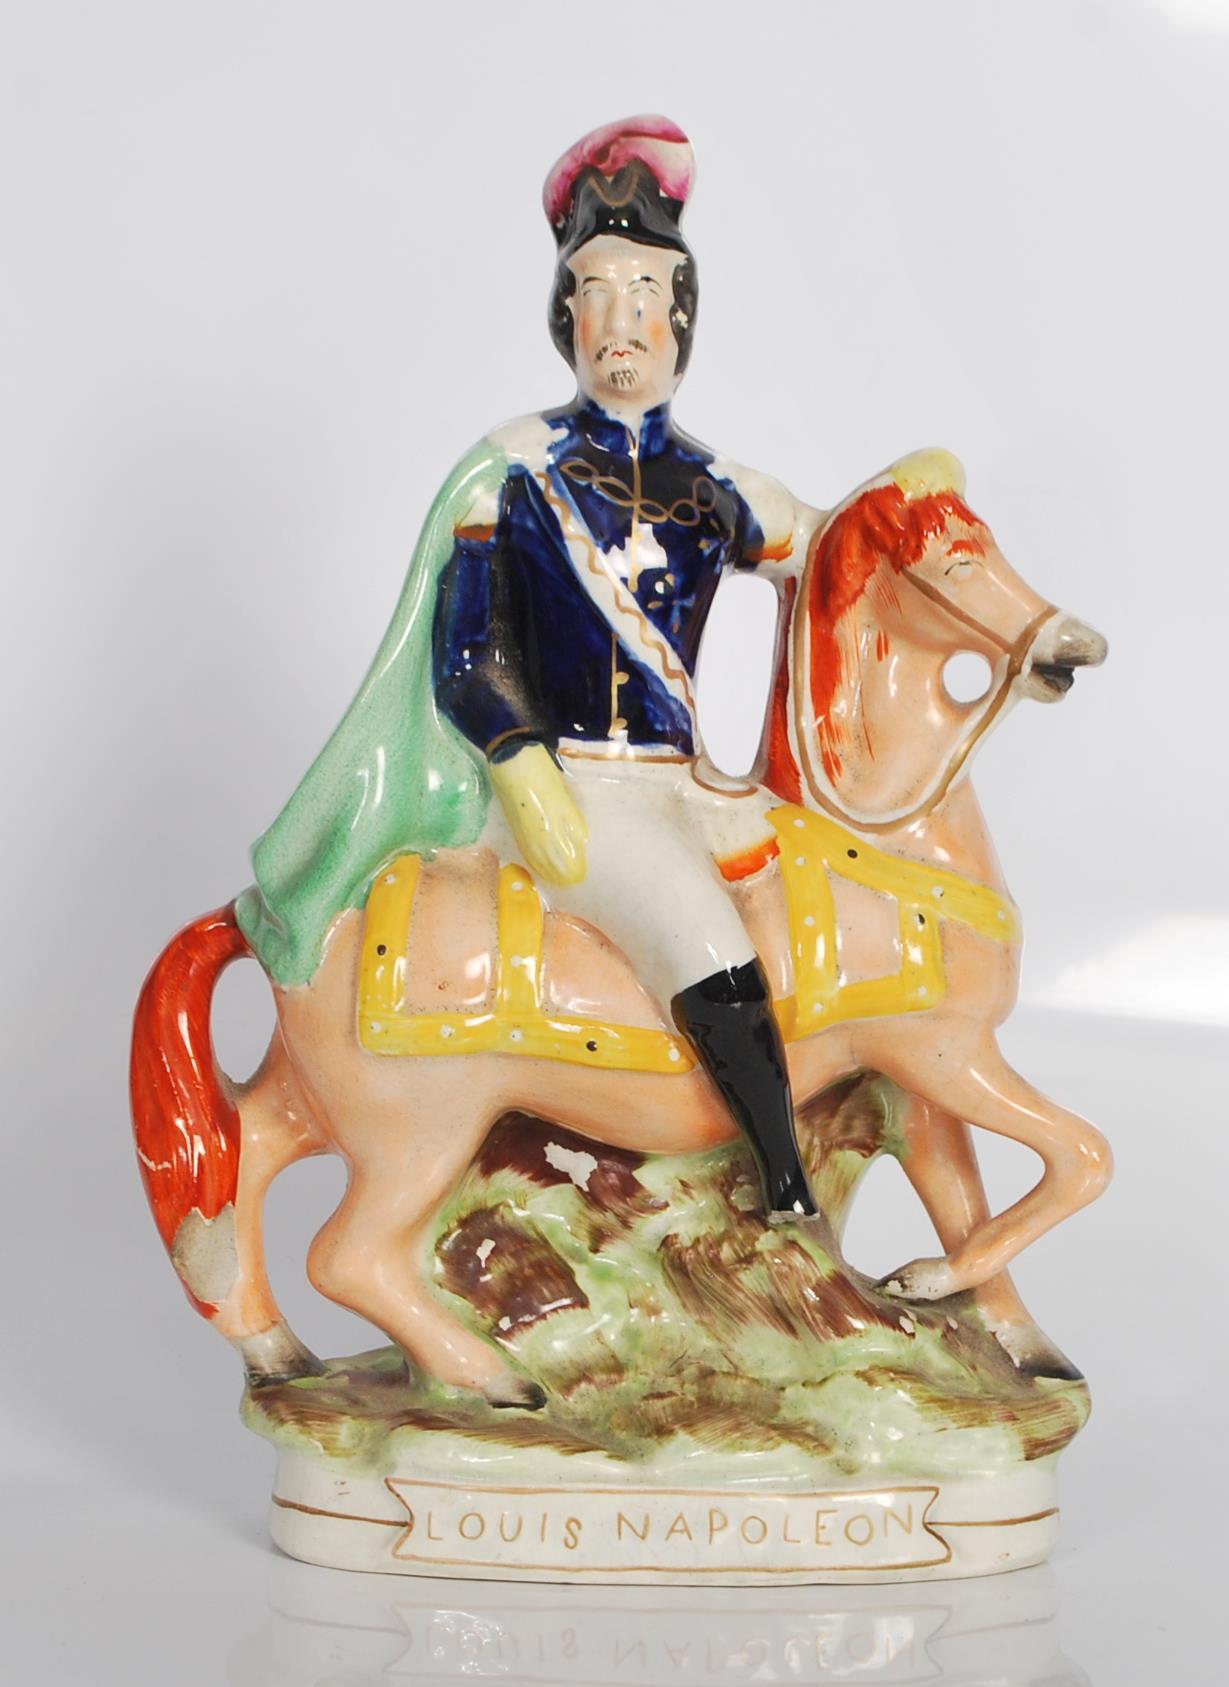 A 19th century Staffordshire flatback figurine of Louis Napoleon Emperor  of France on horseback.